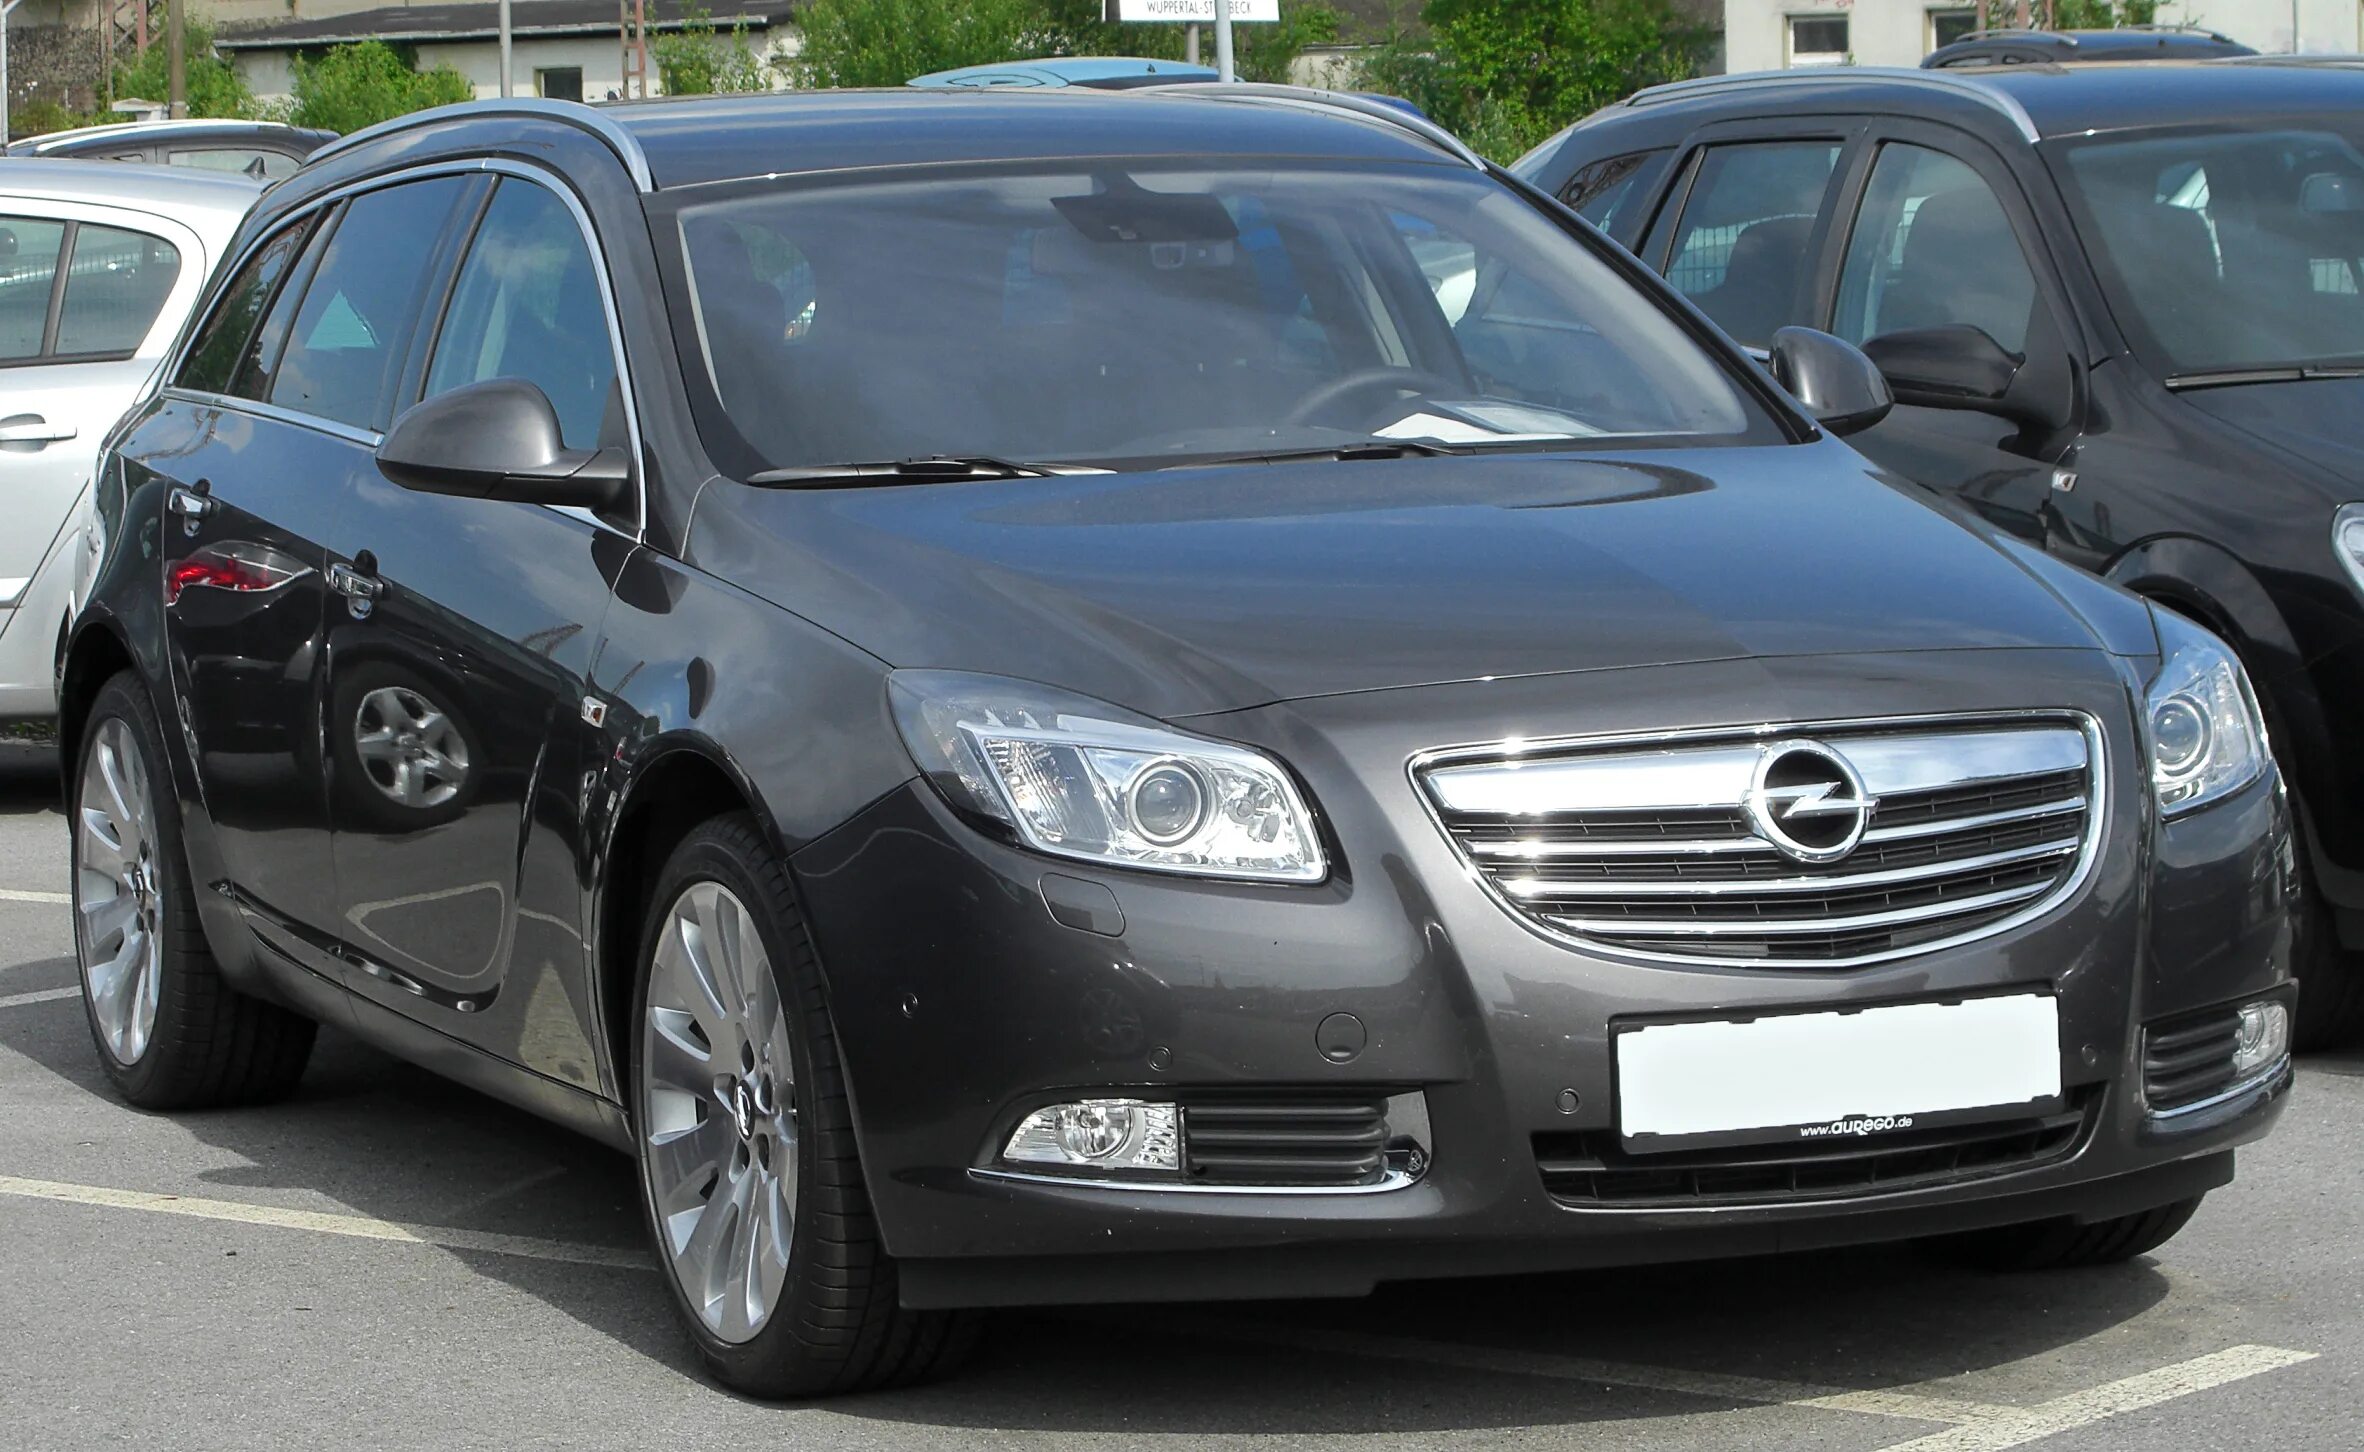 Opel Insignia 2010. Opel Insignia 2011. Opel Insignia 2011 2.0. Opel Insignia 2011 2.0 дизель. 2.0 cdti opel